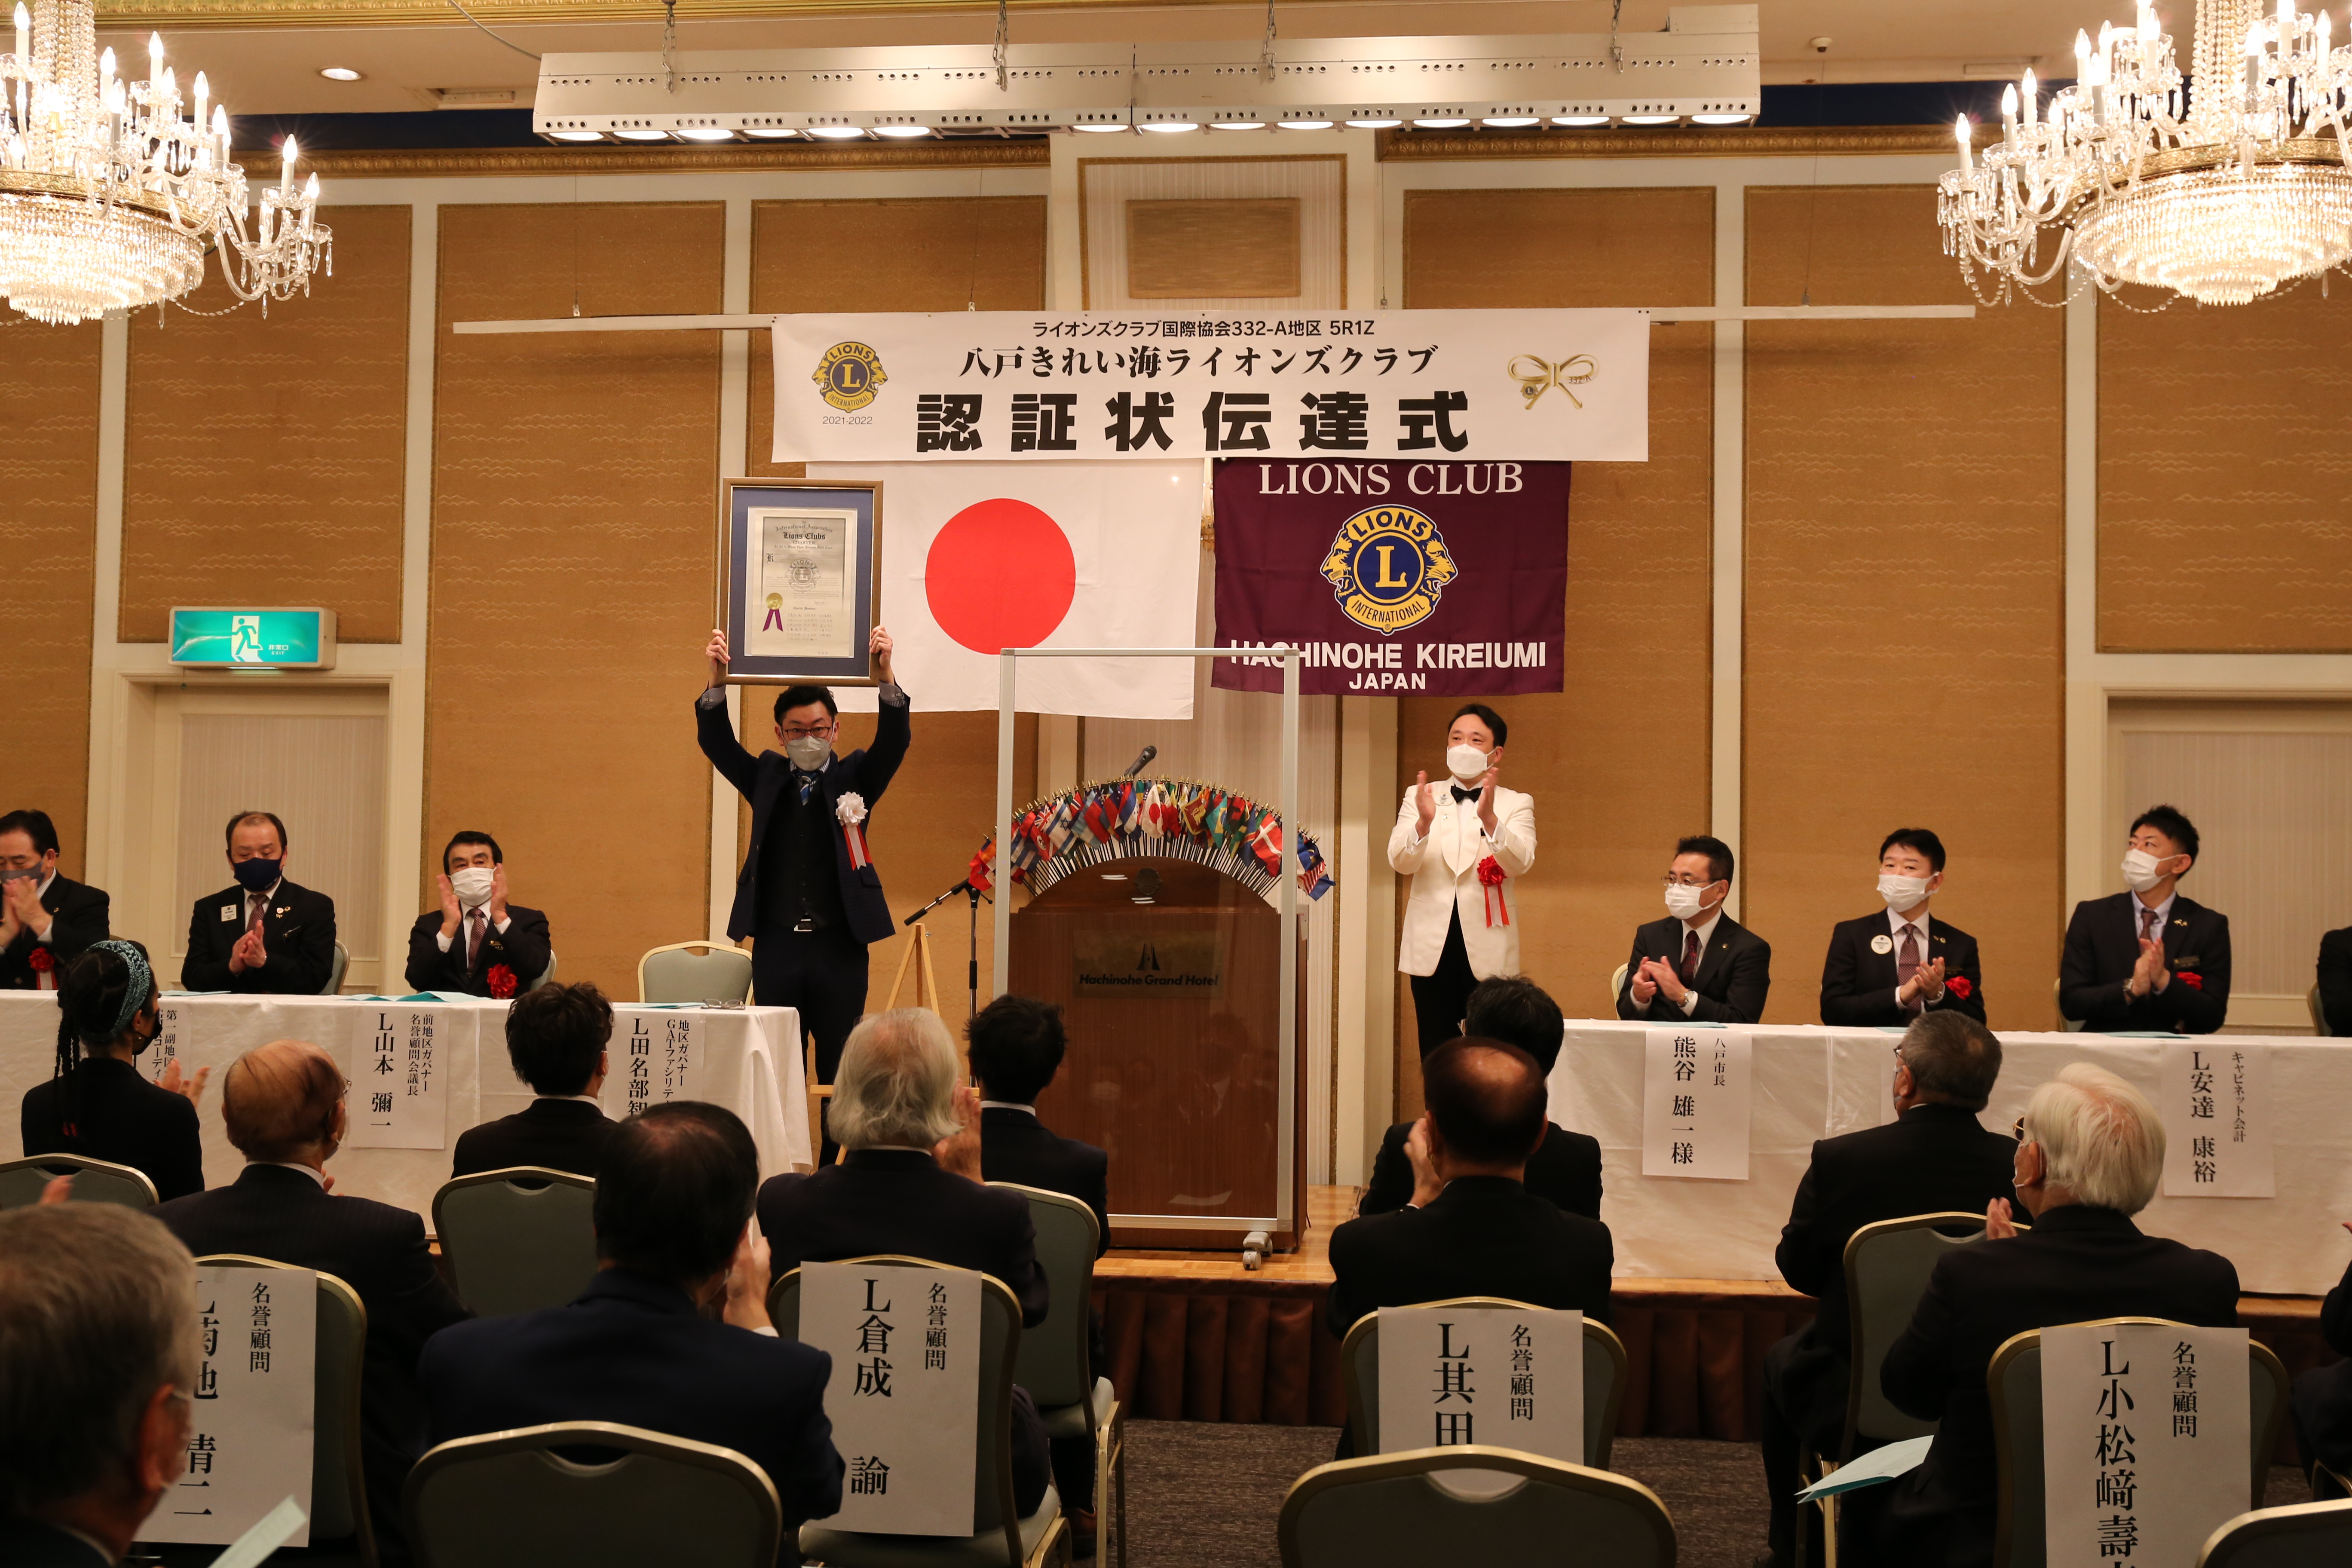 Charter night for Hachinohe Kireiumi Lions Club